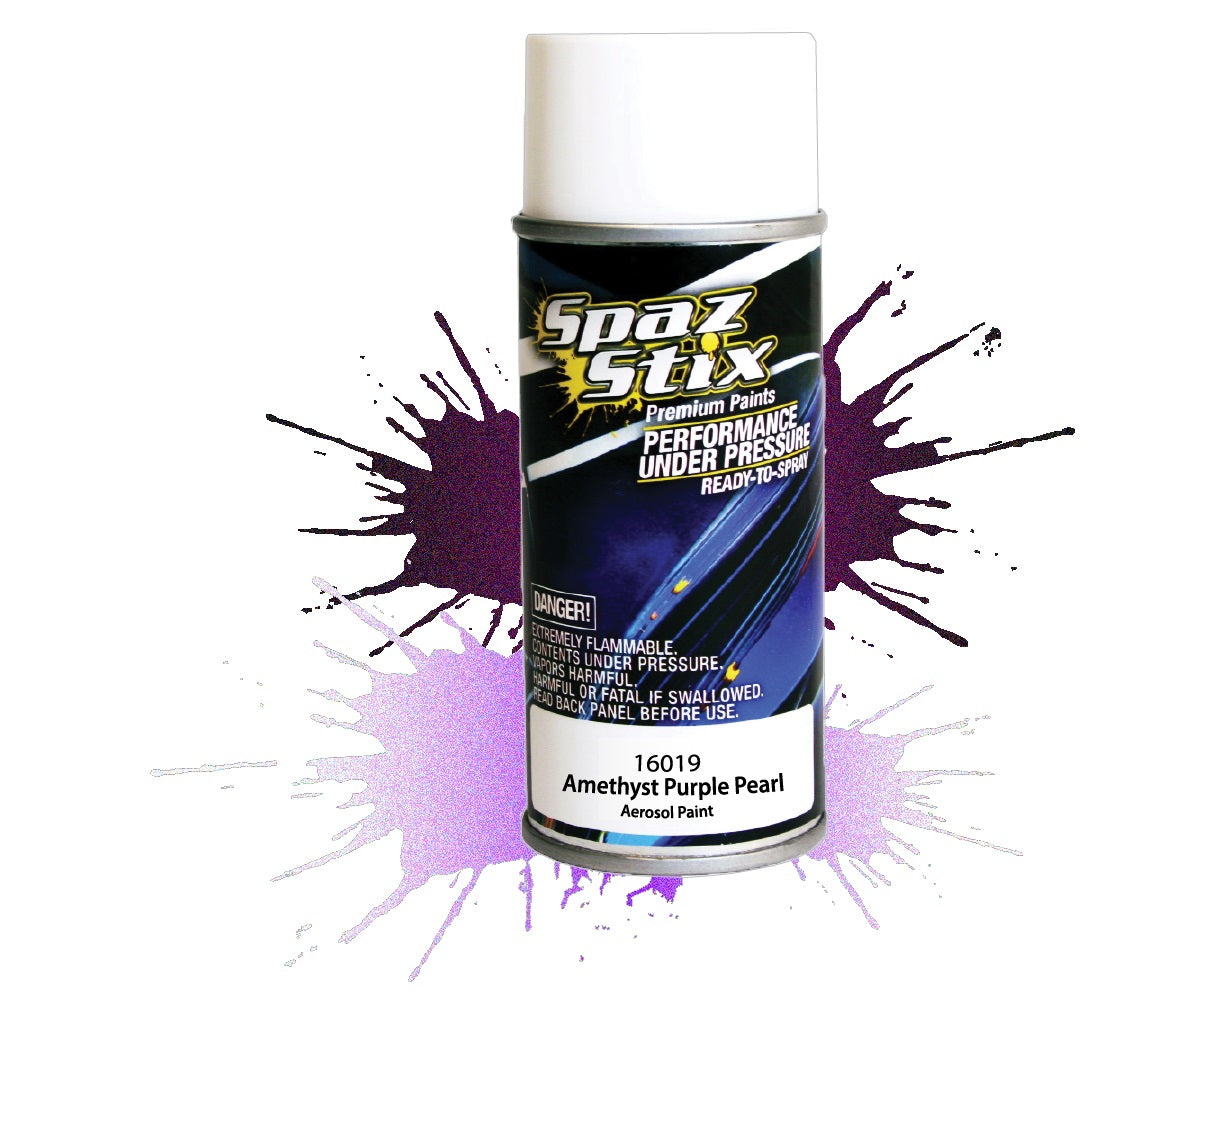 Spazstix Aerosol Paint 3.5oz Can (Amethyst Purple Pearl)